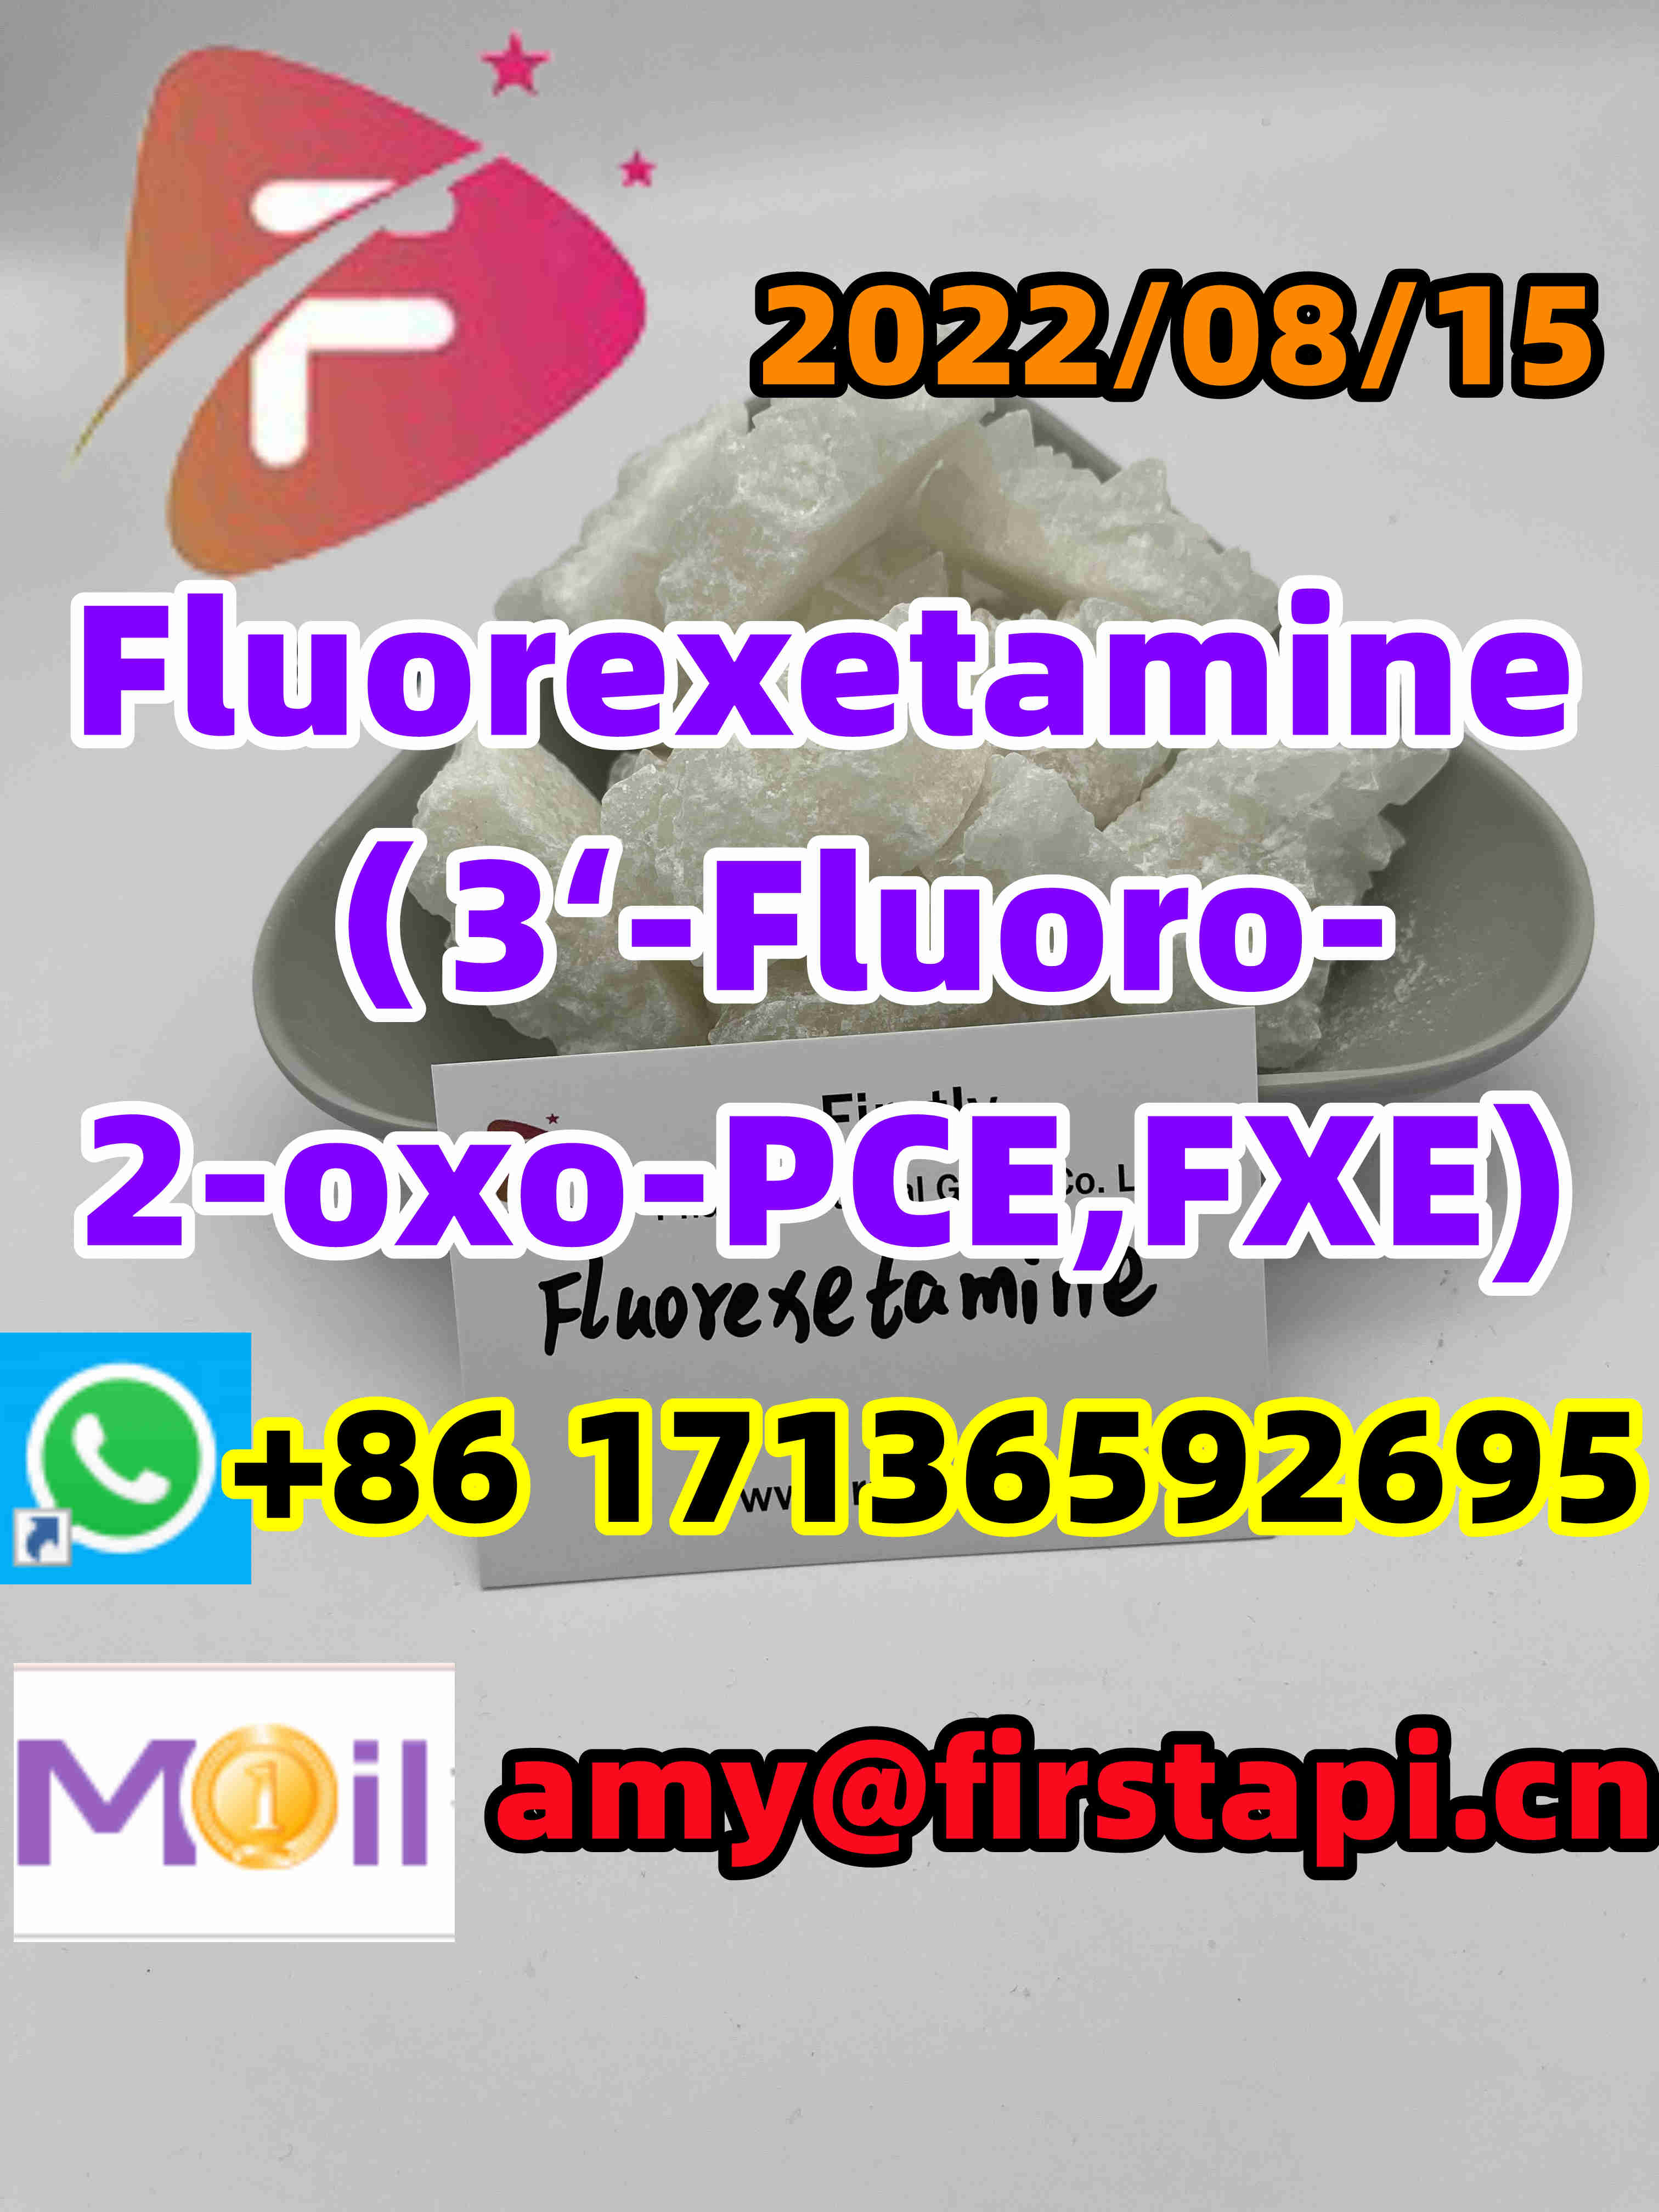 Fluorexetamine,,high quality,low price,（3‘-Fluoro-2-oxo-PCE,FXE),Fast delivery - photo